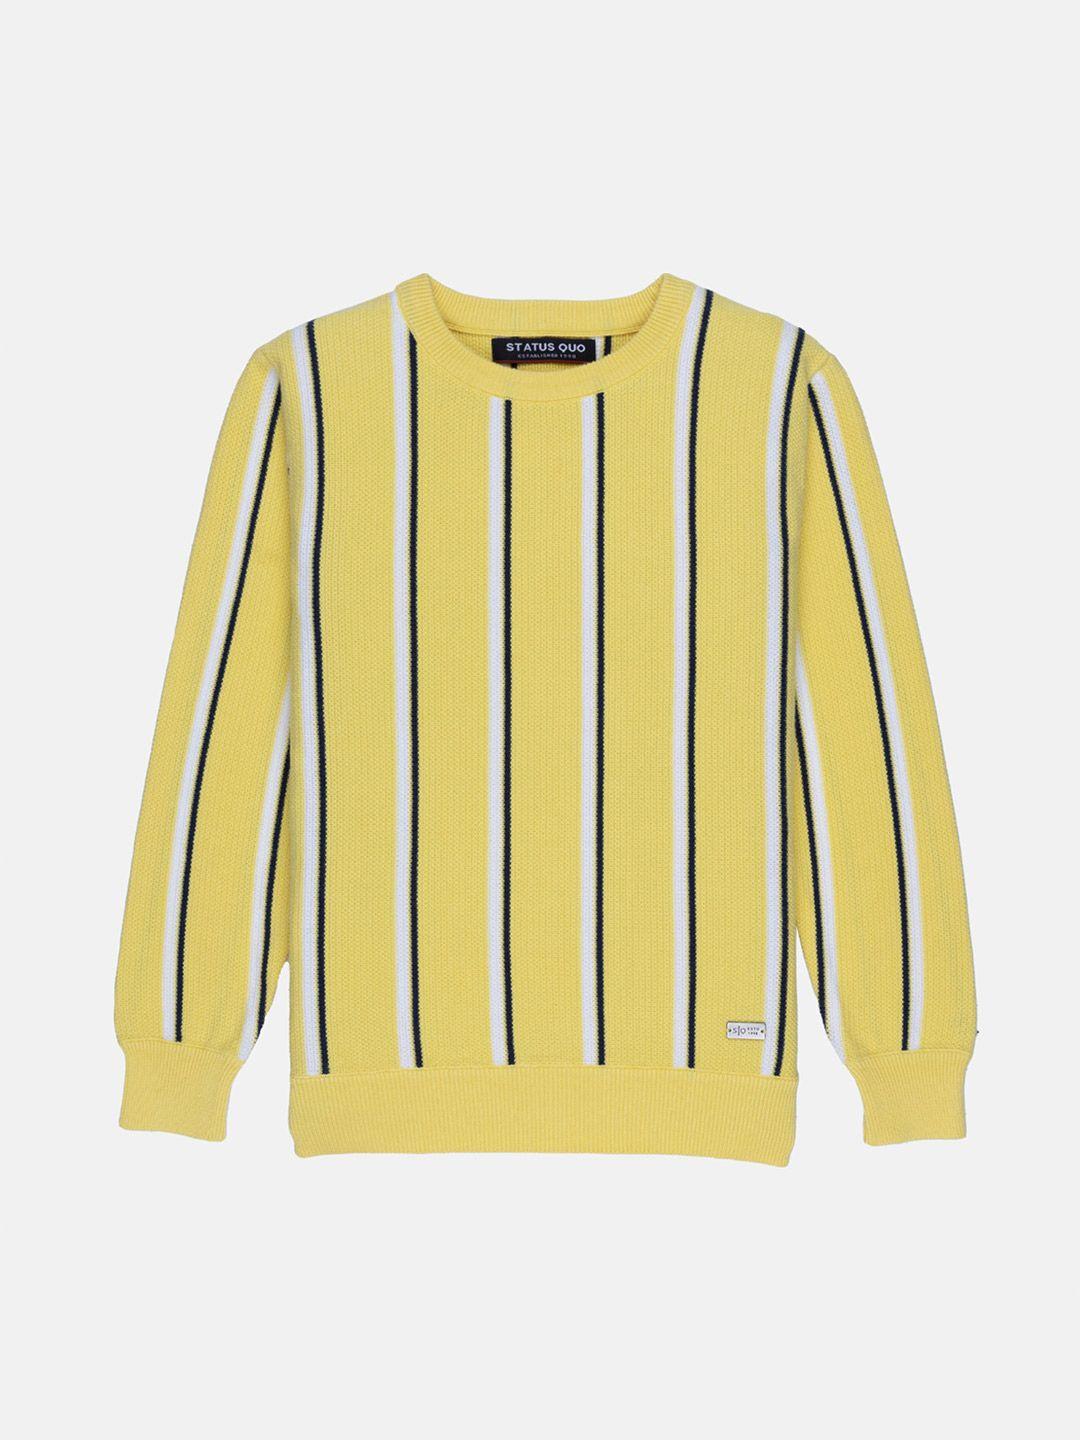 status quo boys yellow & white striped round neck cotton pullover sweater